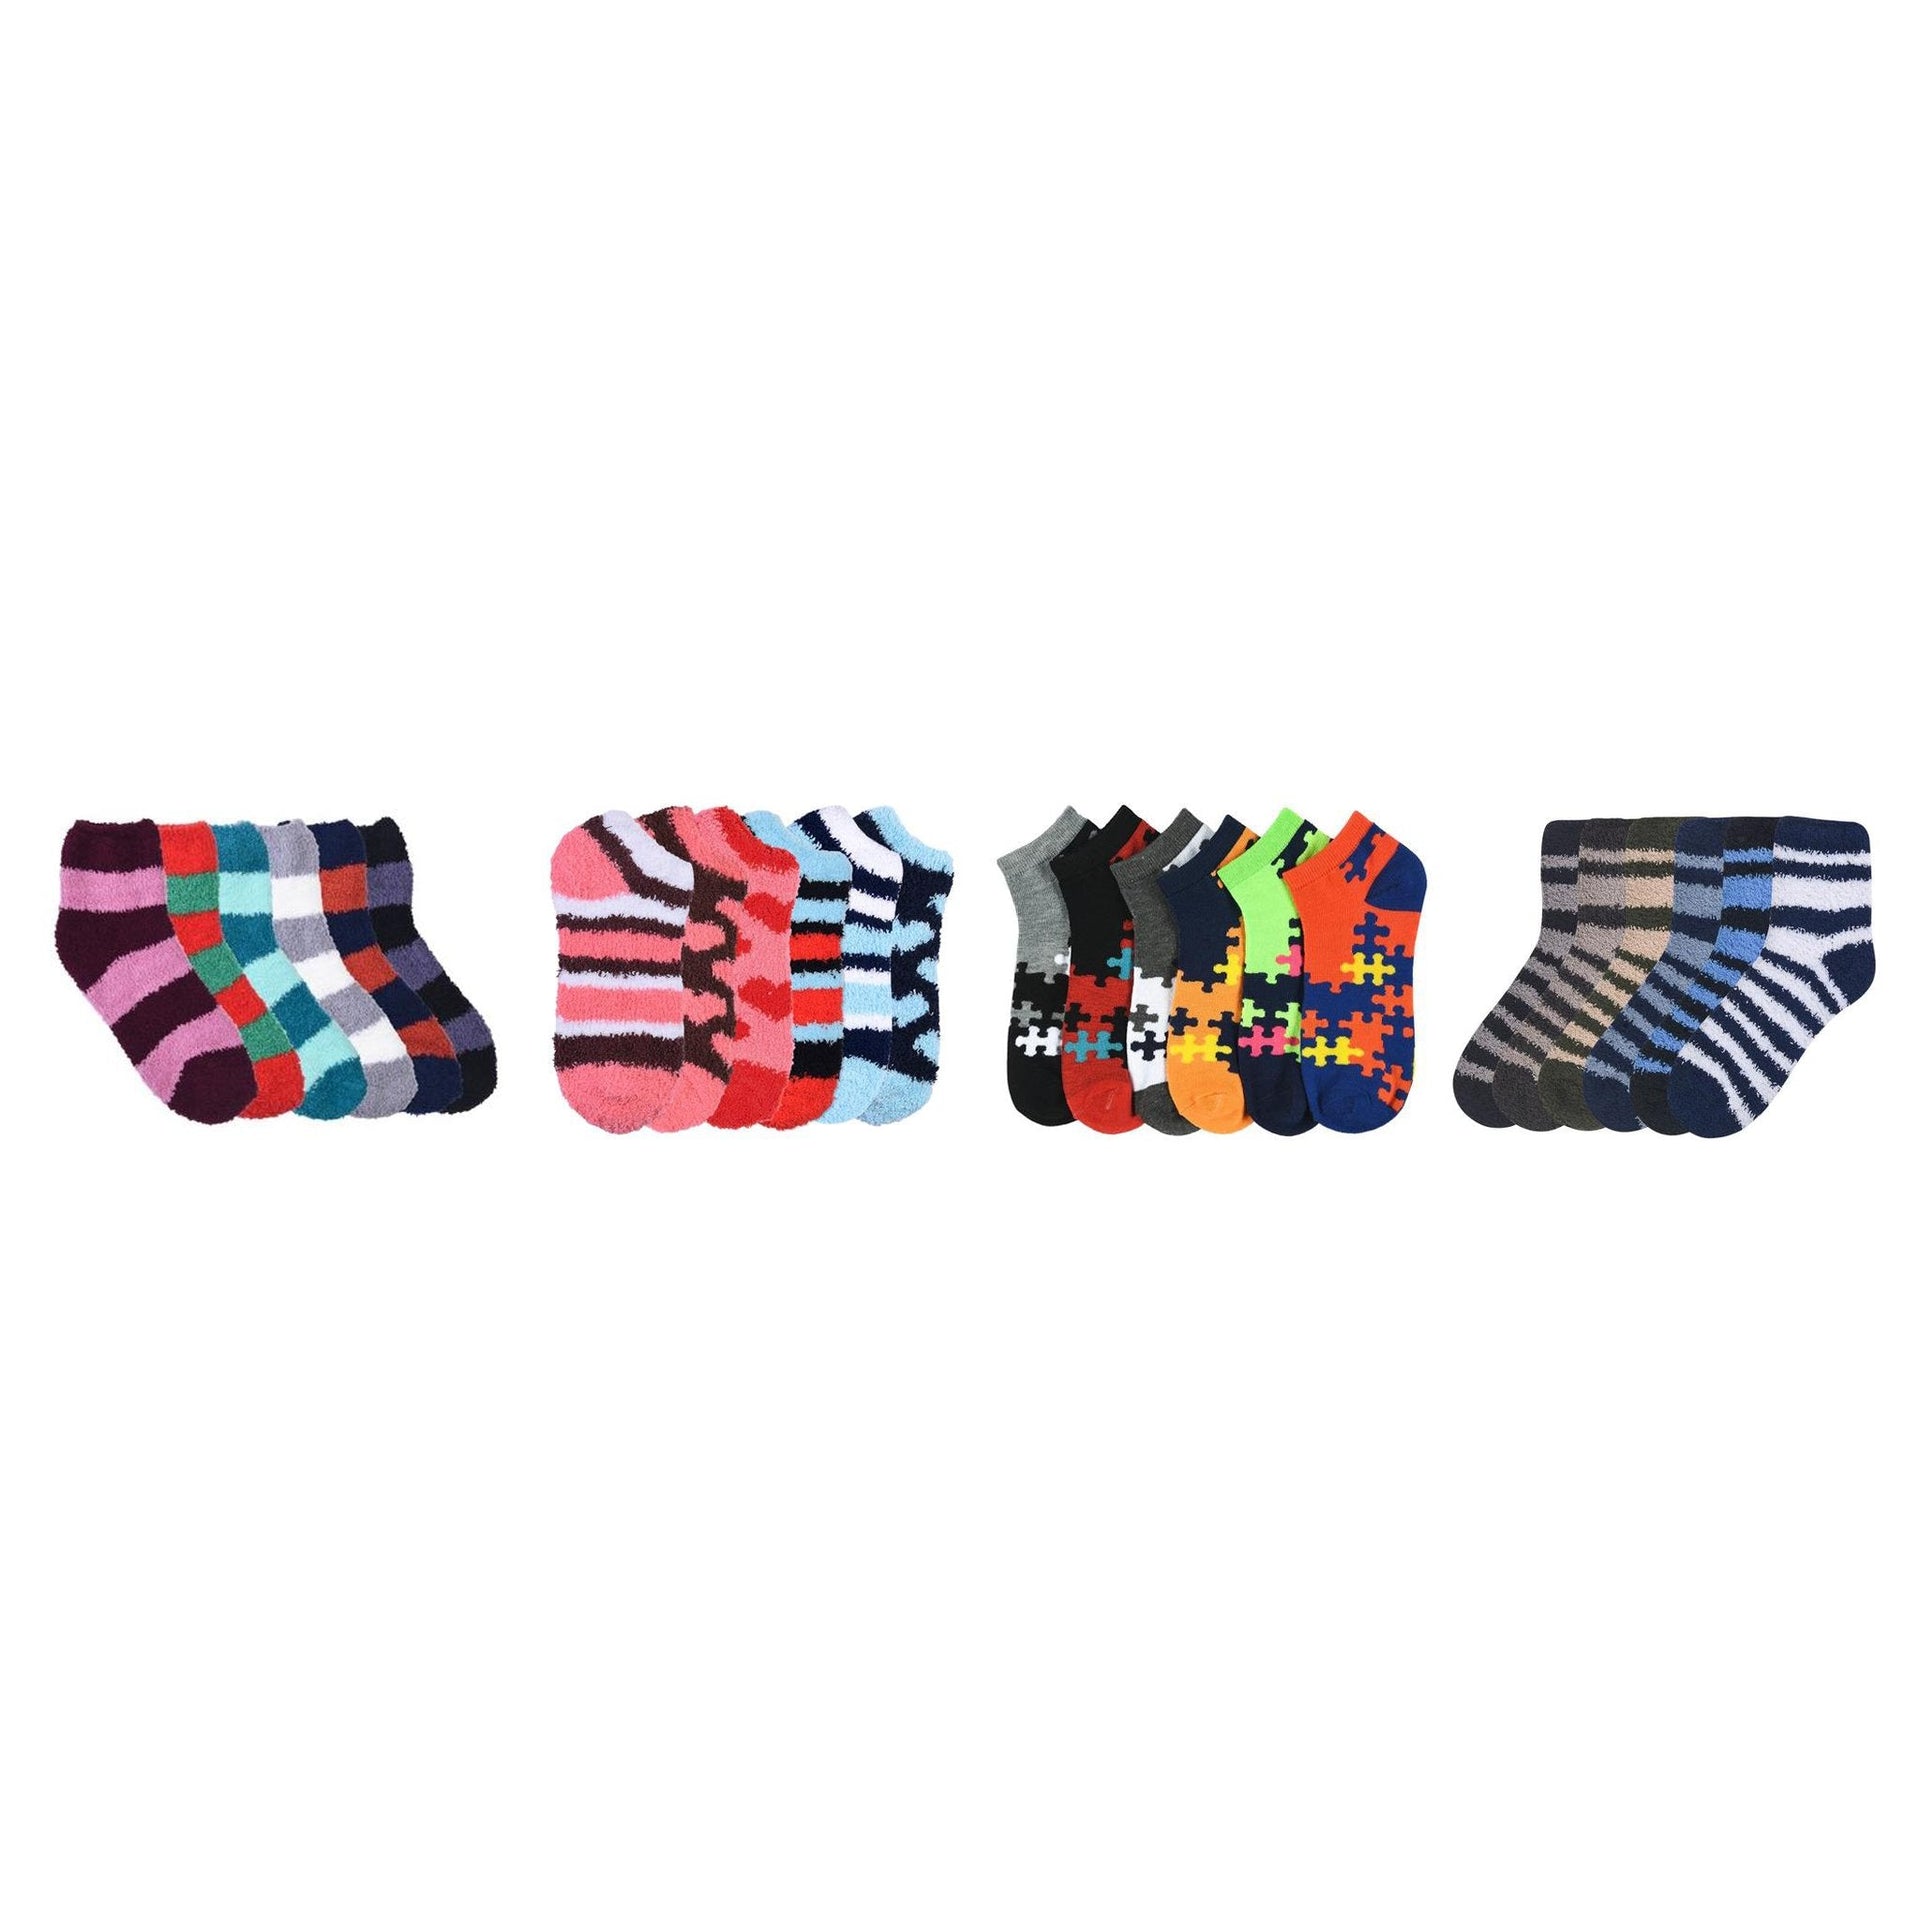 Wholesale Mens Cotton Ankle Socks - 3 Assorted colors - 120 pairs per case  —